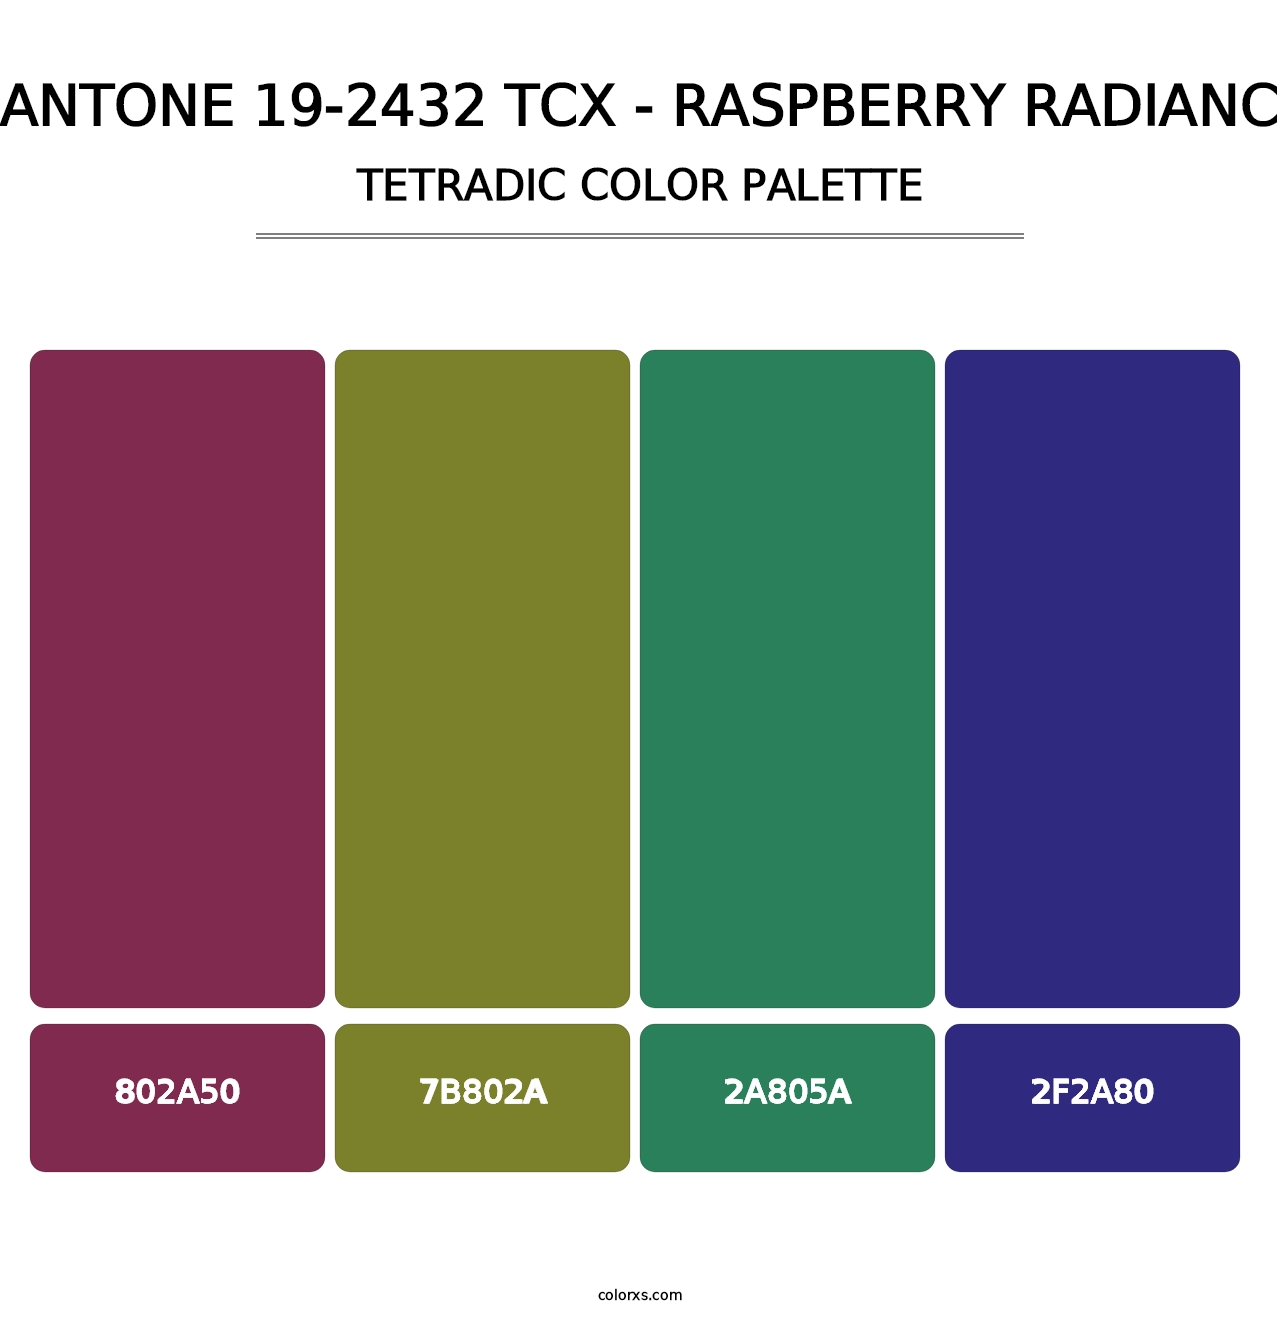 PANTONE 19-2432 TCX - Raspberry Radiance - Tetradic Color Palette